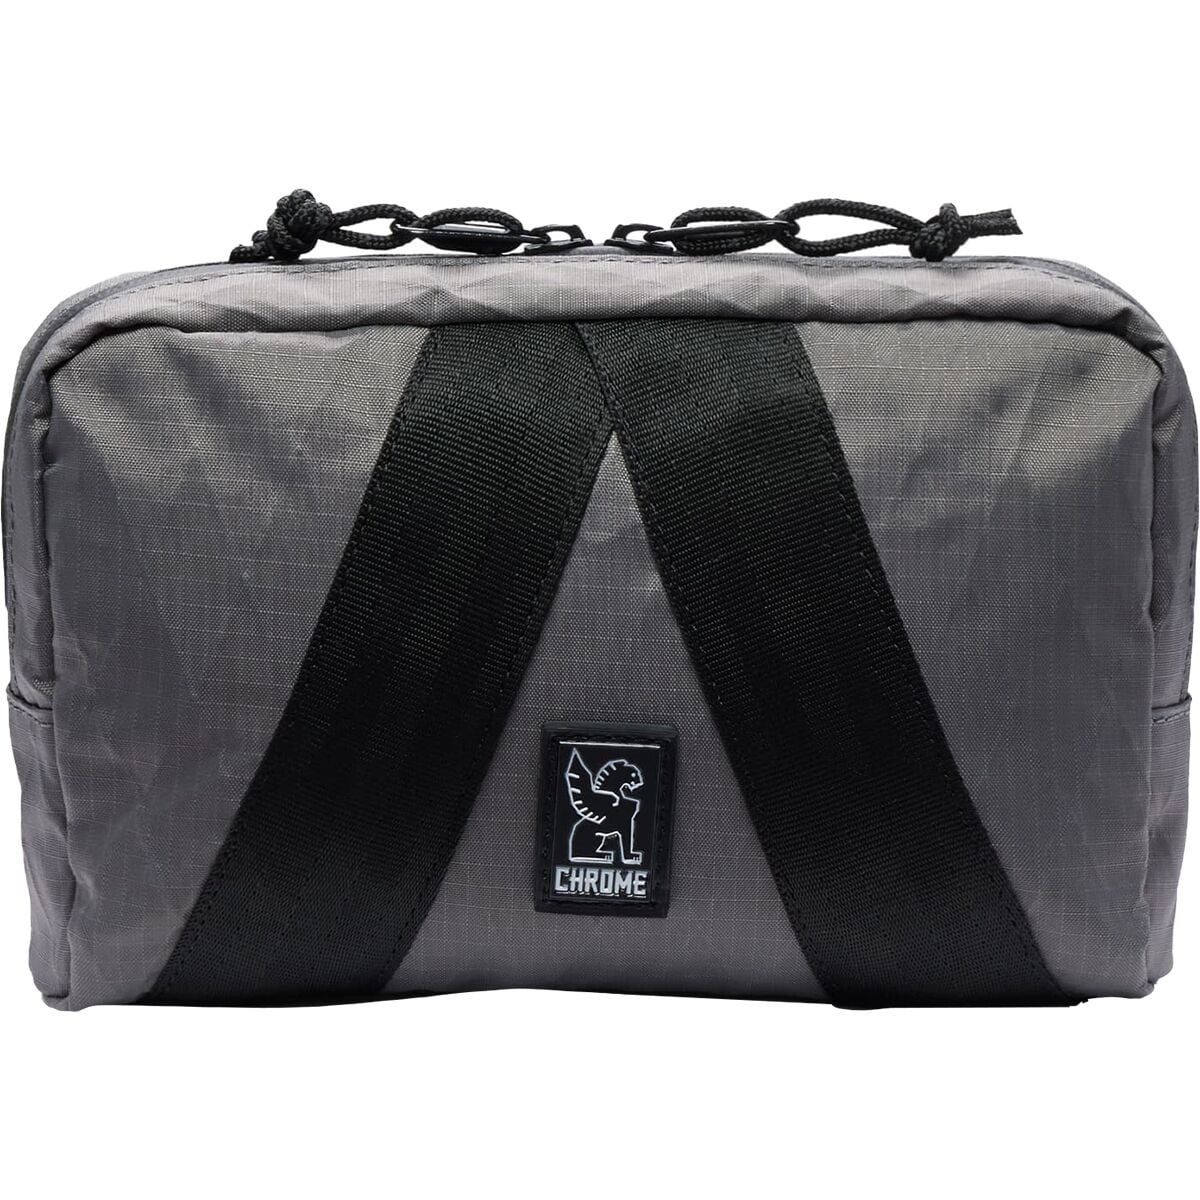 Мини-сумка на эластичном ремне Chrome, серый